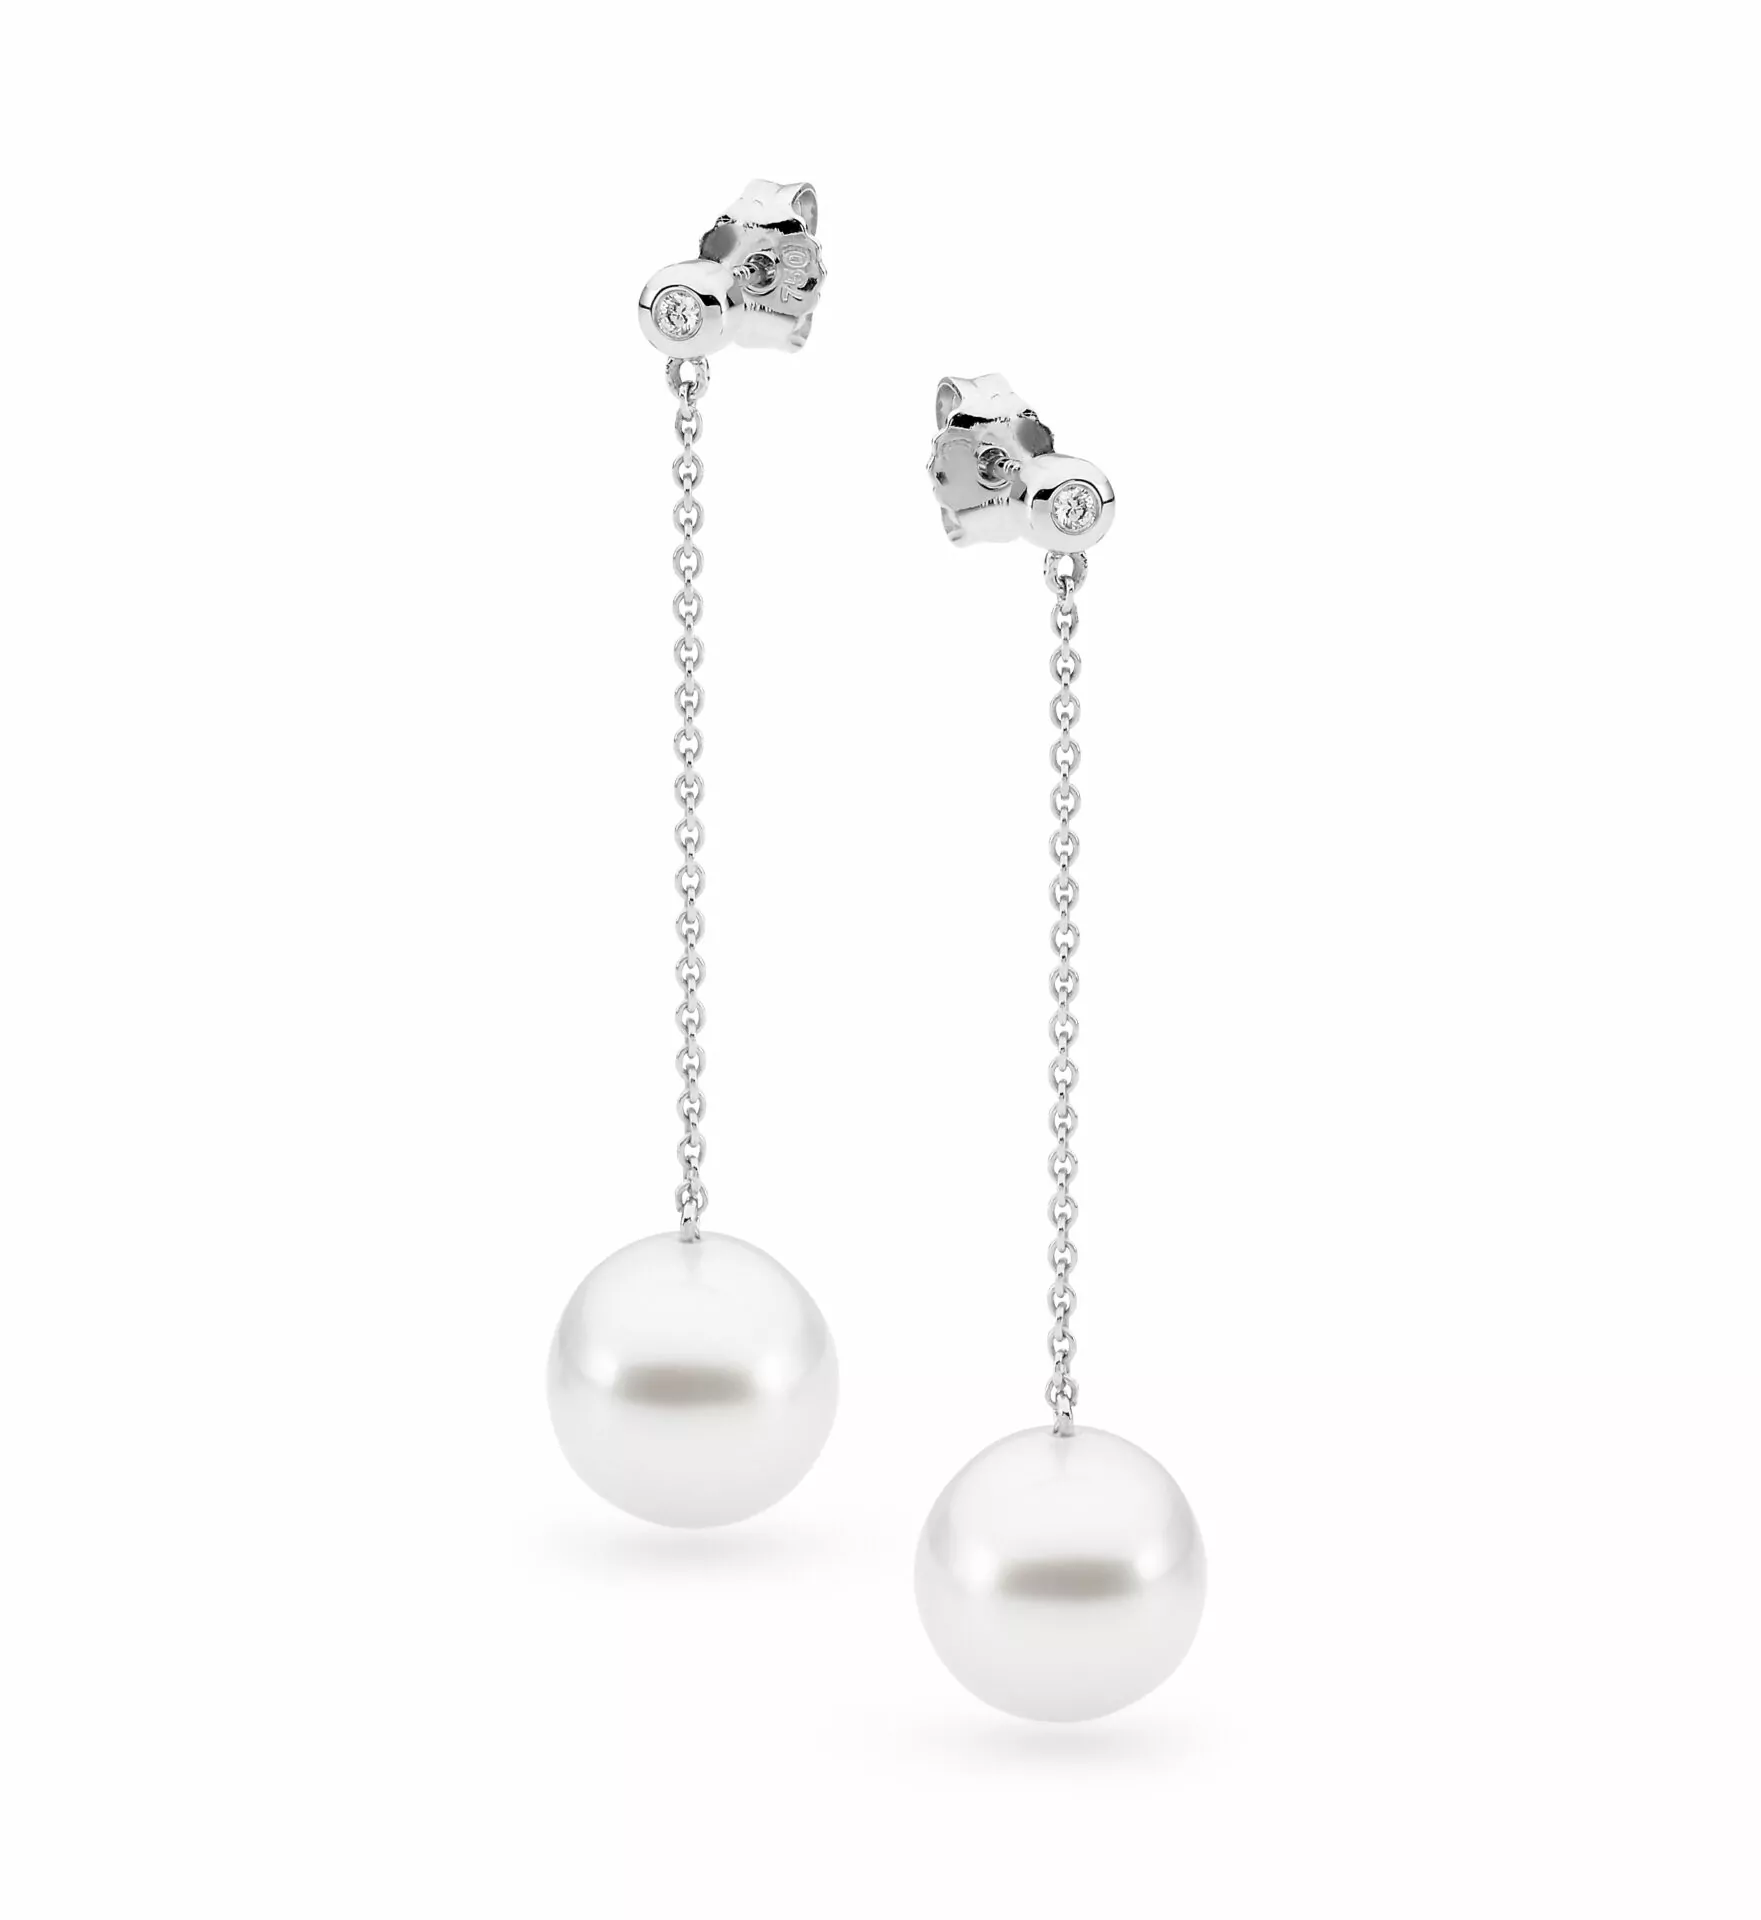 Allure Pearls earrings 3